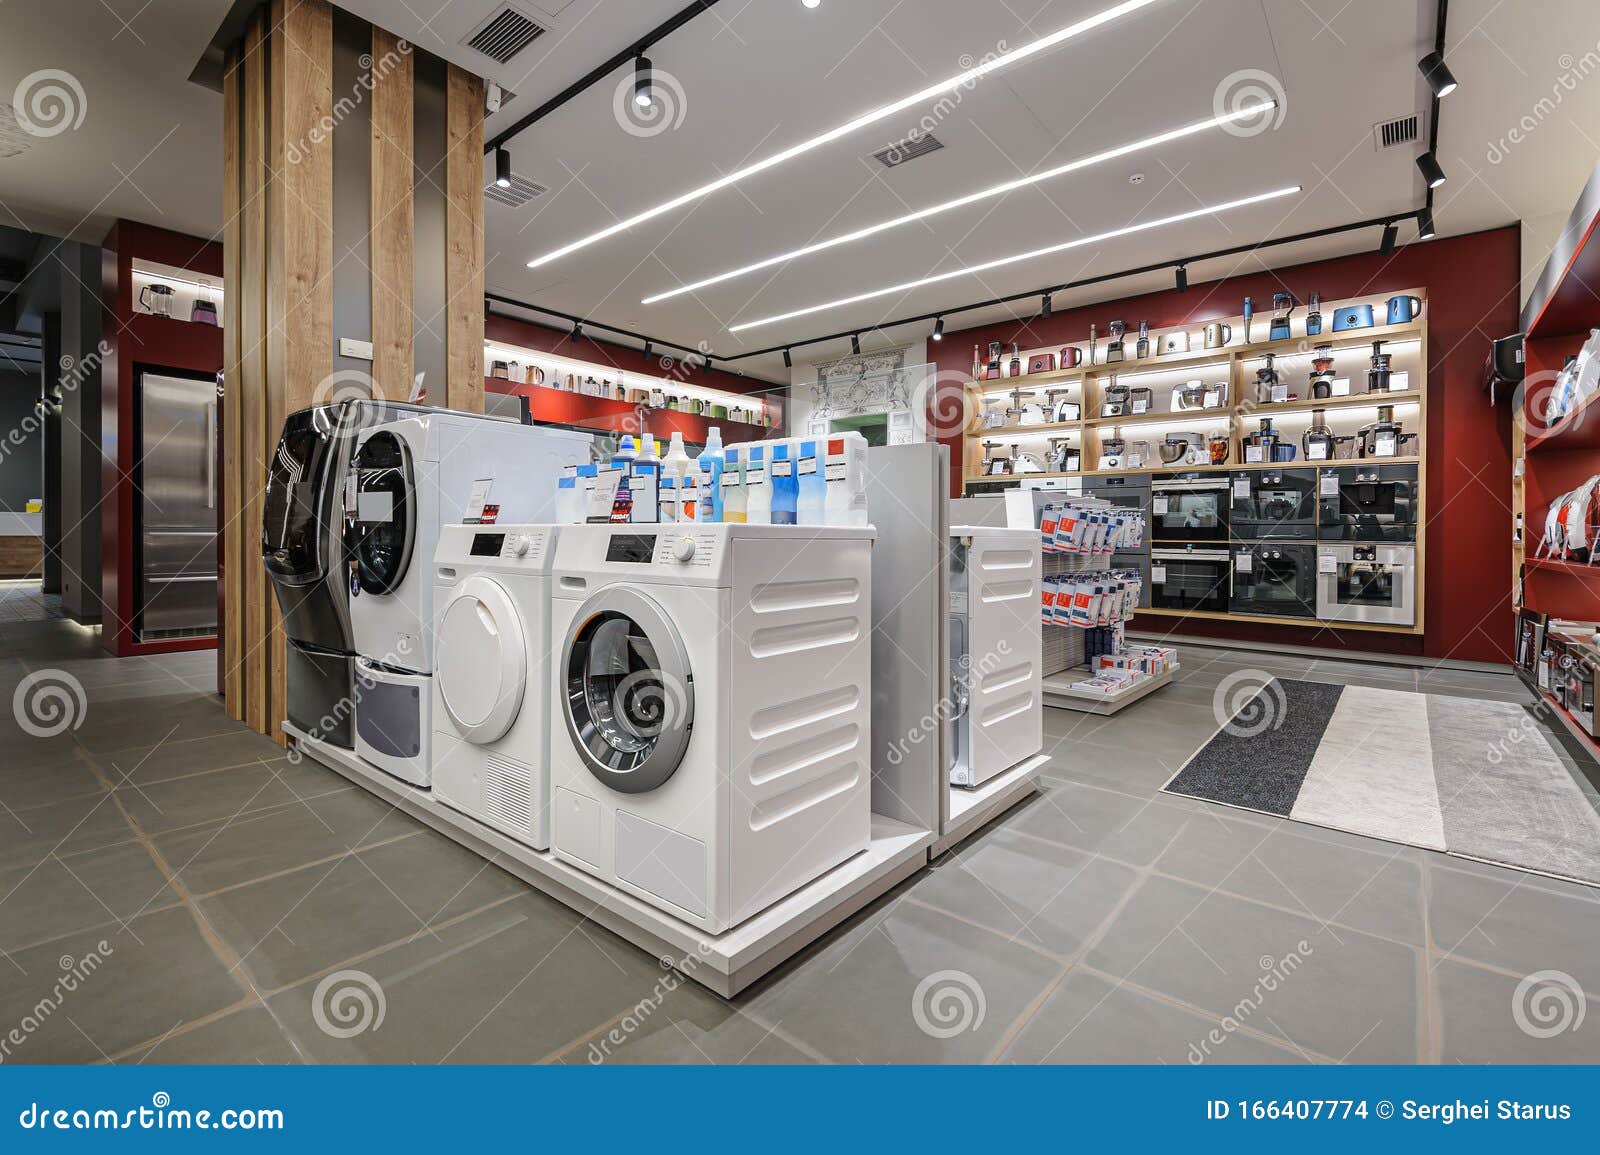 Premium Home Appliance Store Interior Stock Photo - Image of modern ...